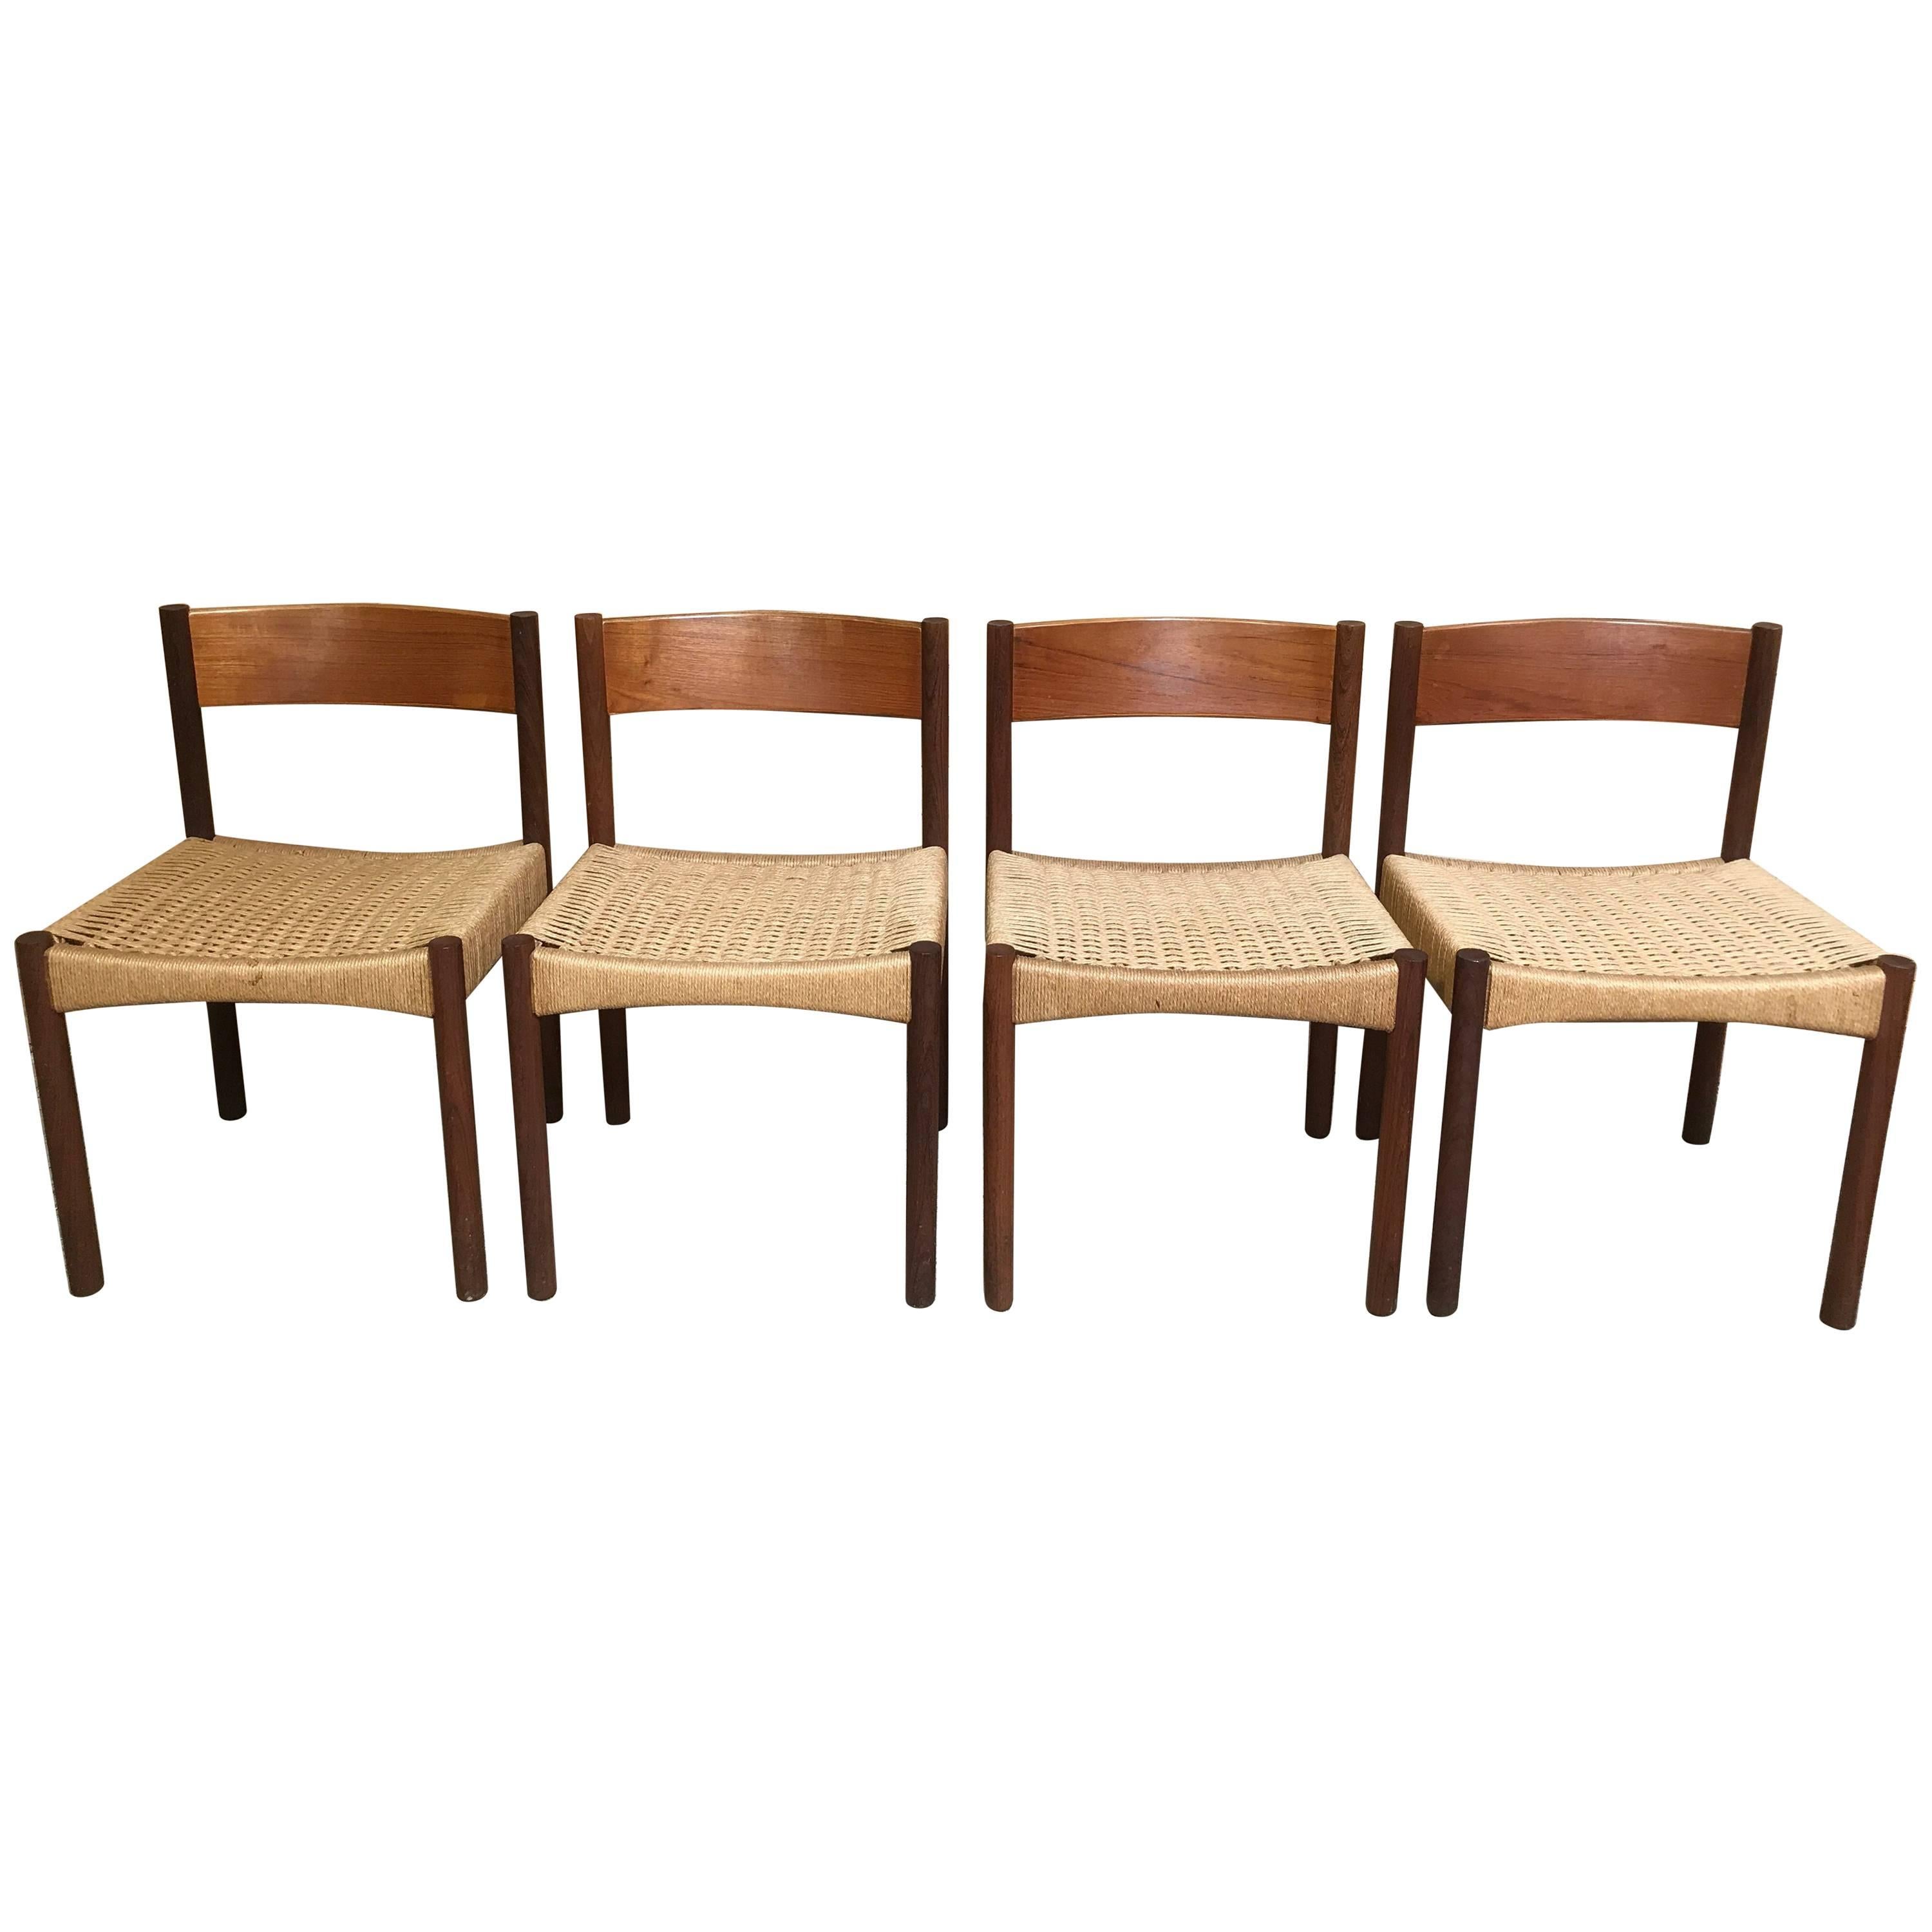 Four Vintage Danish Teak Dining Chairs Designed by Poul Volther for Frem Rojle